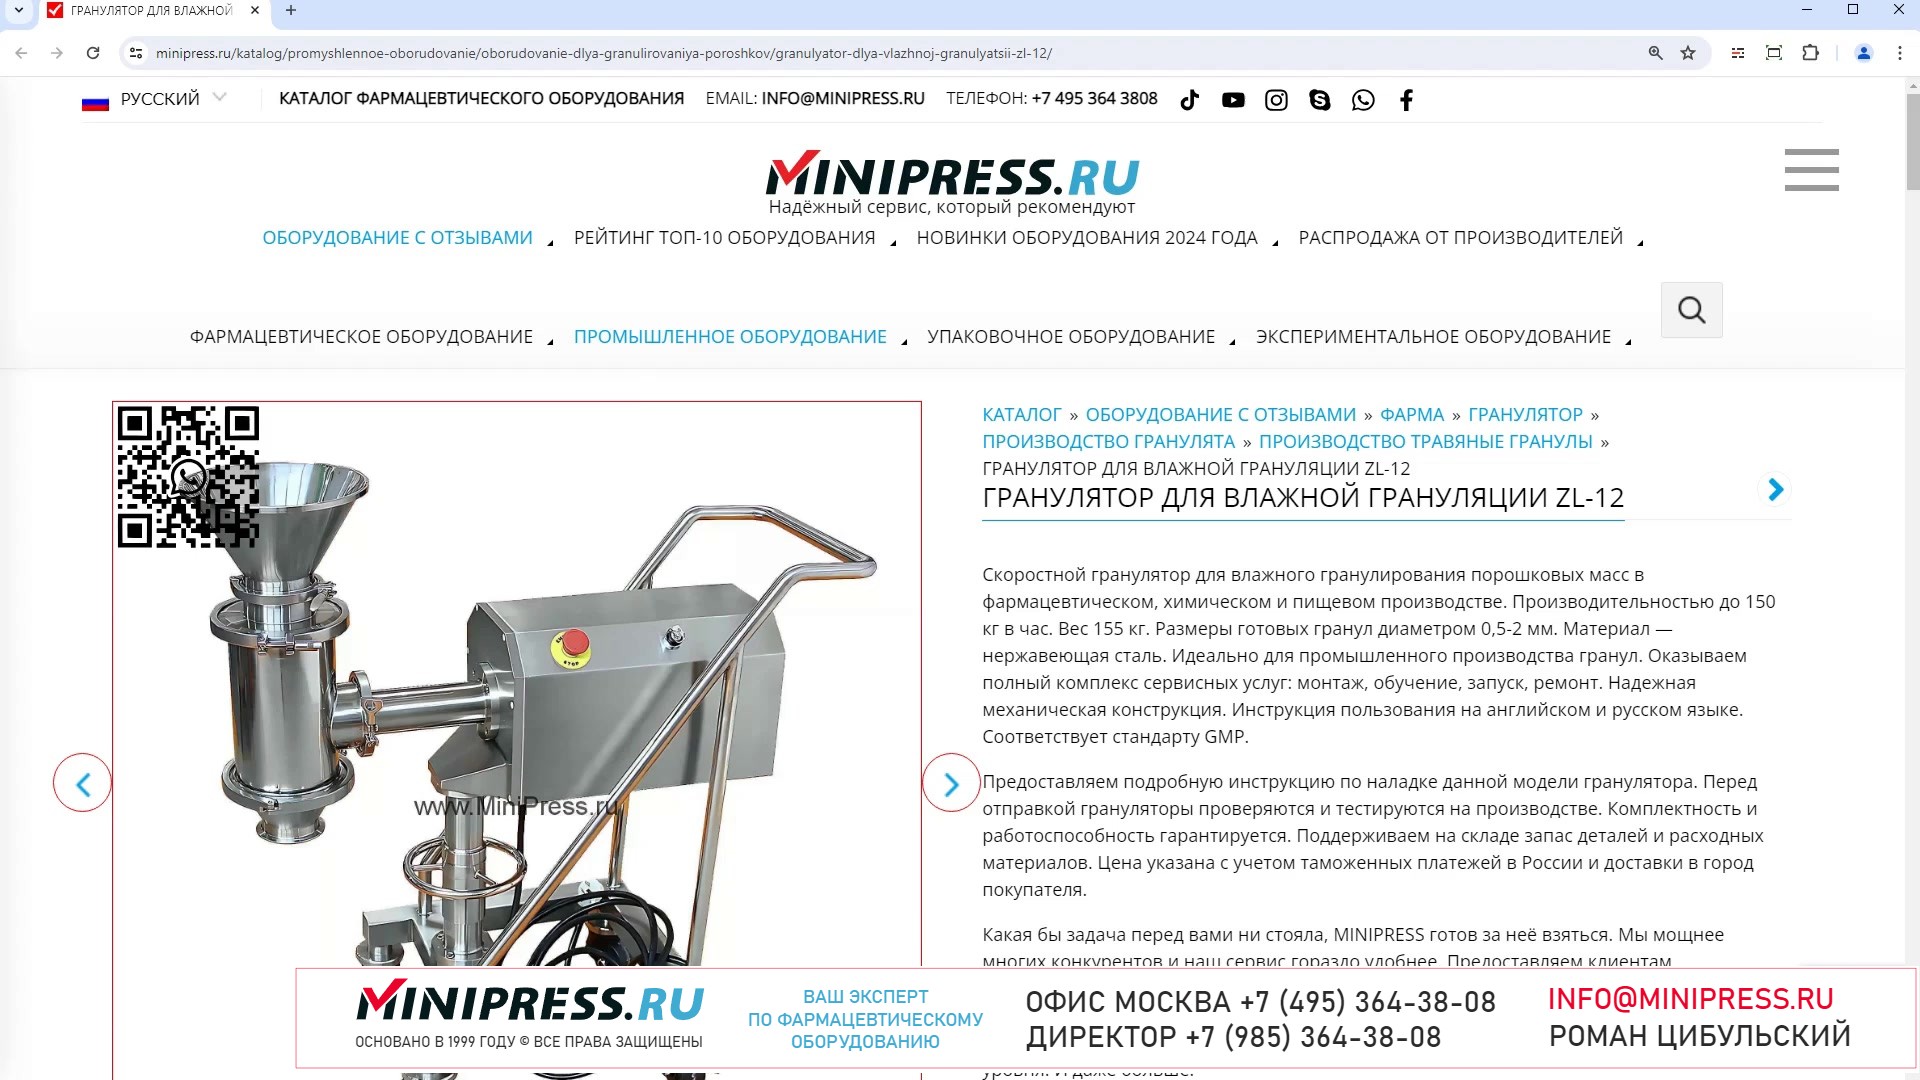 Minipress.ru Гранулятор для влажной грануляции ZL-12